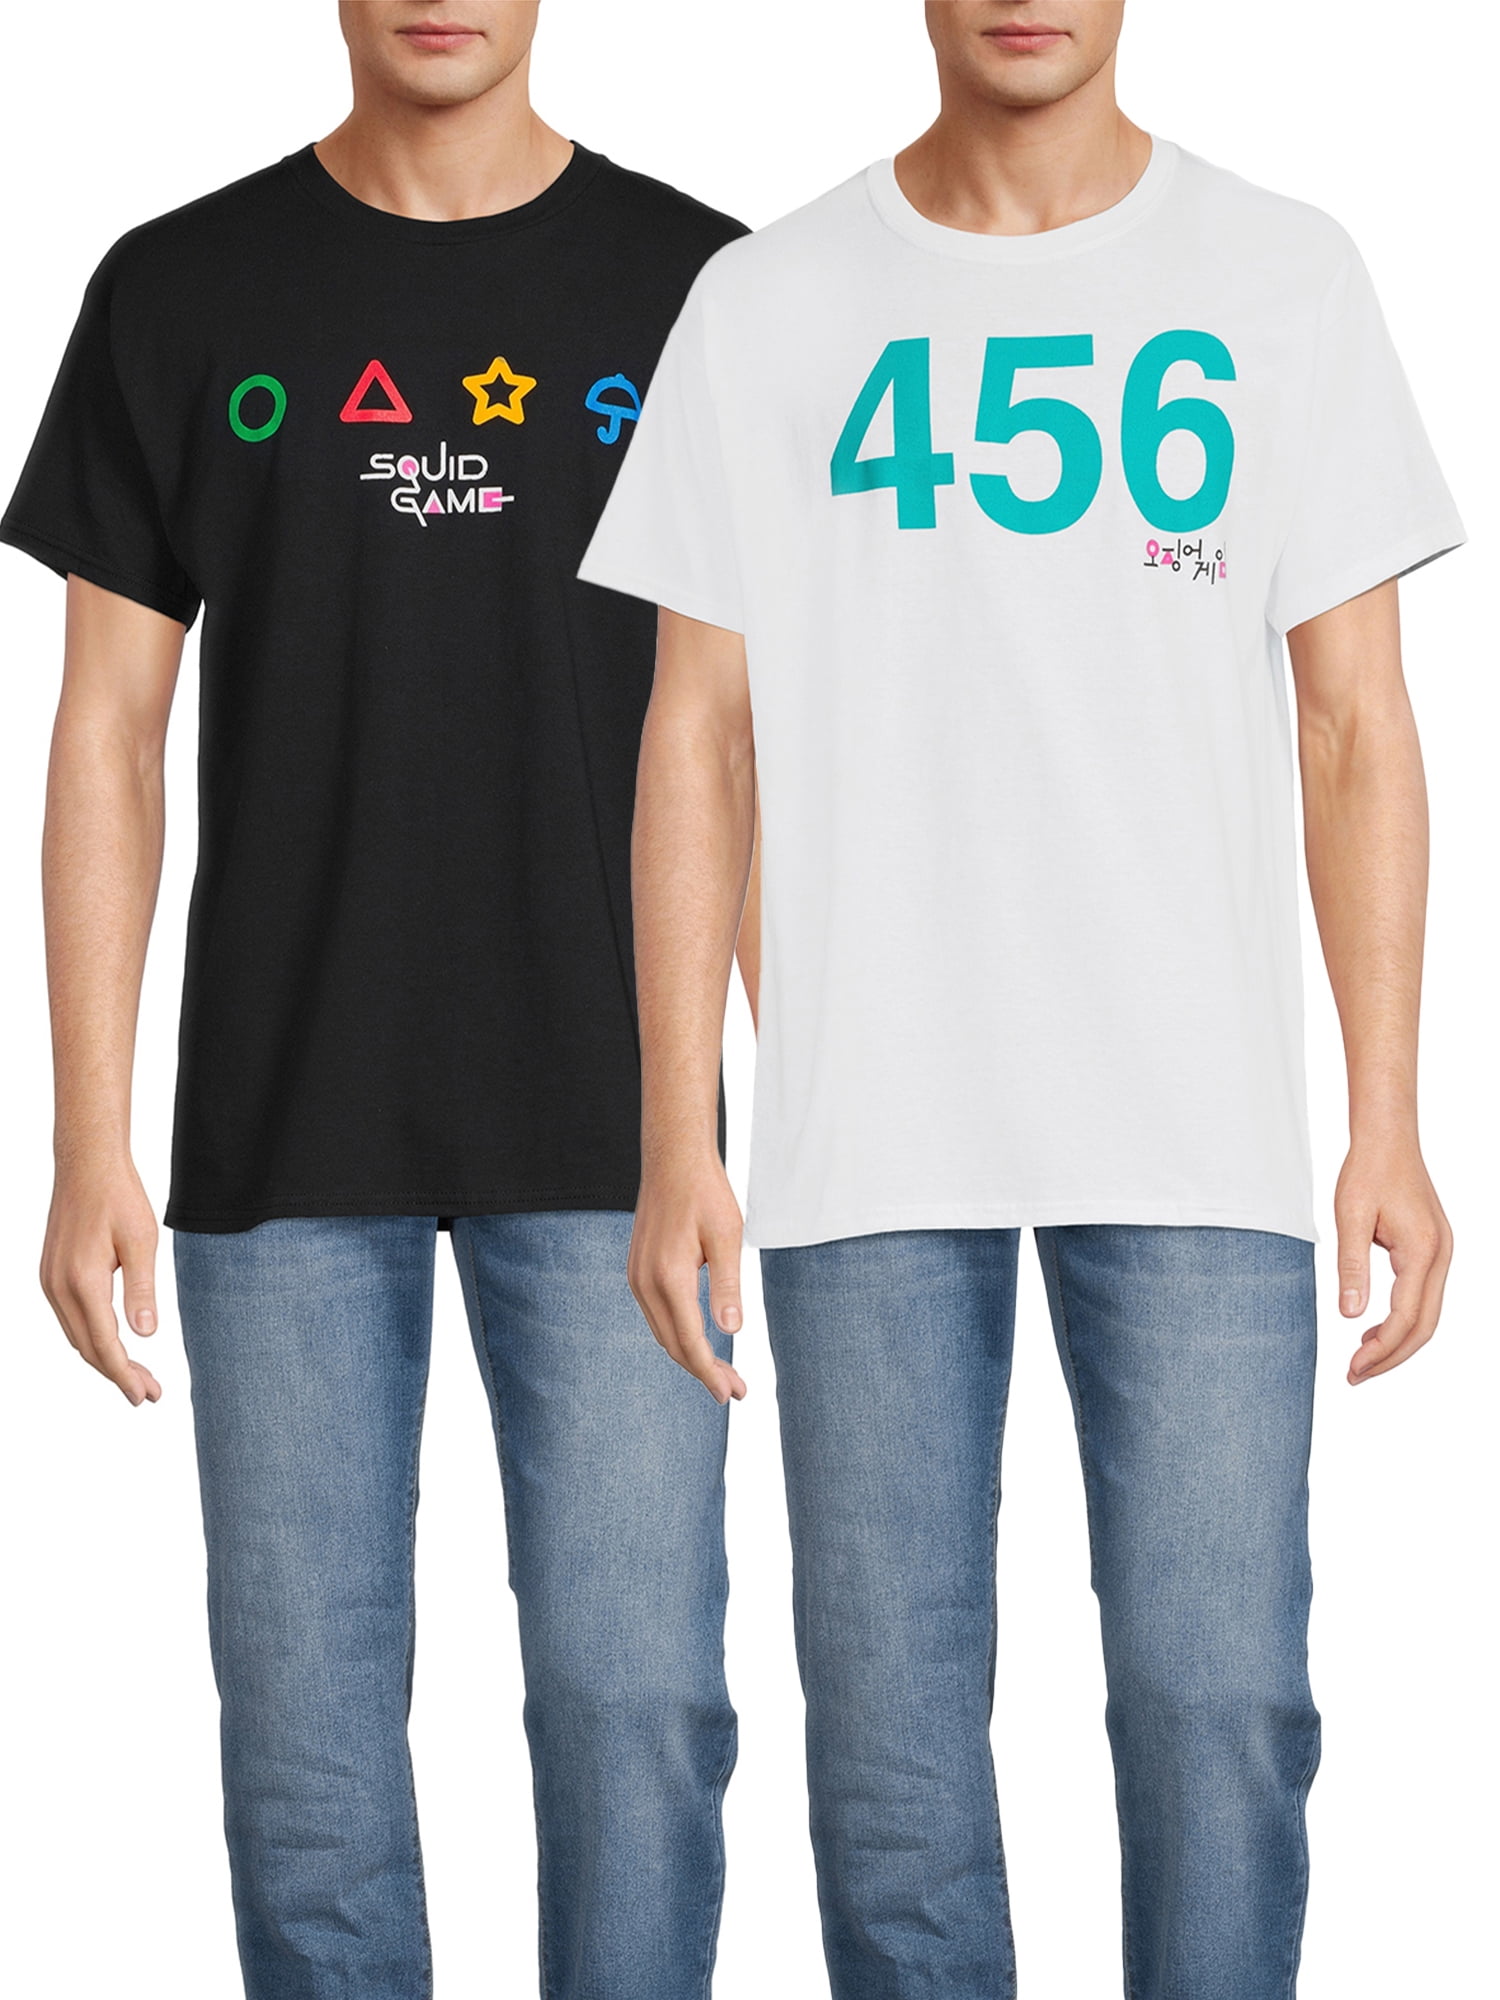 Squid game player 001 and 456 shirt - Kingteeshop